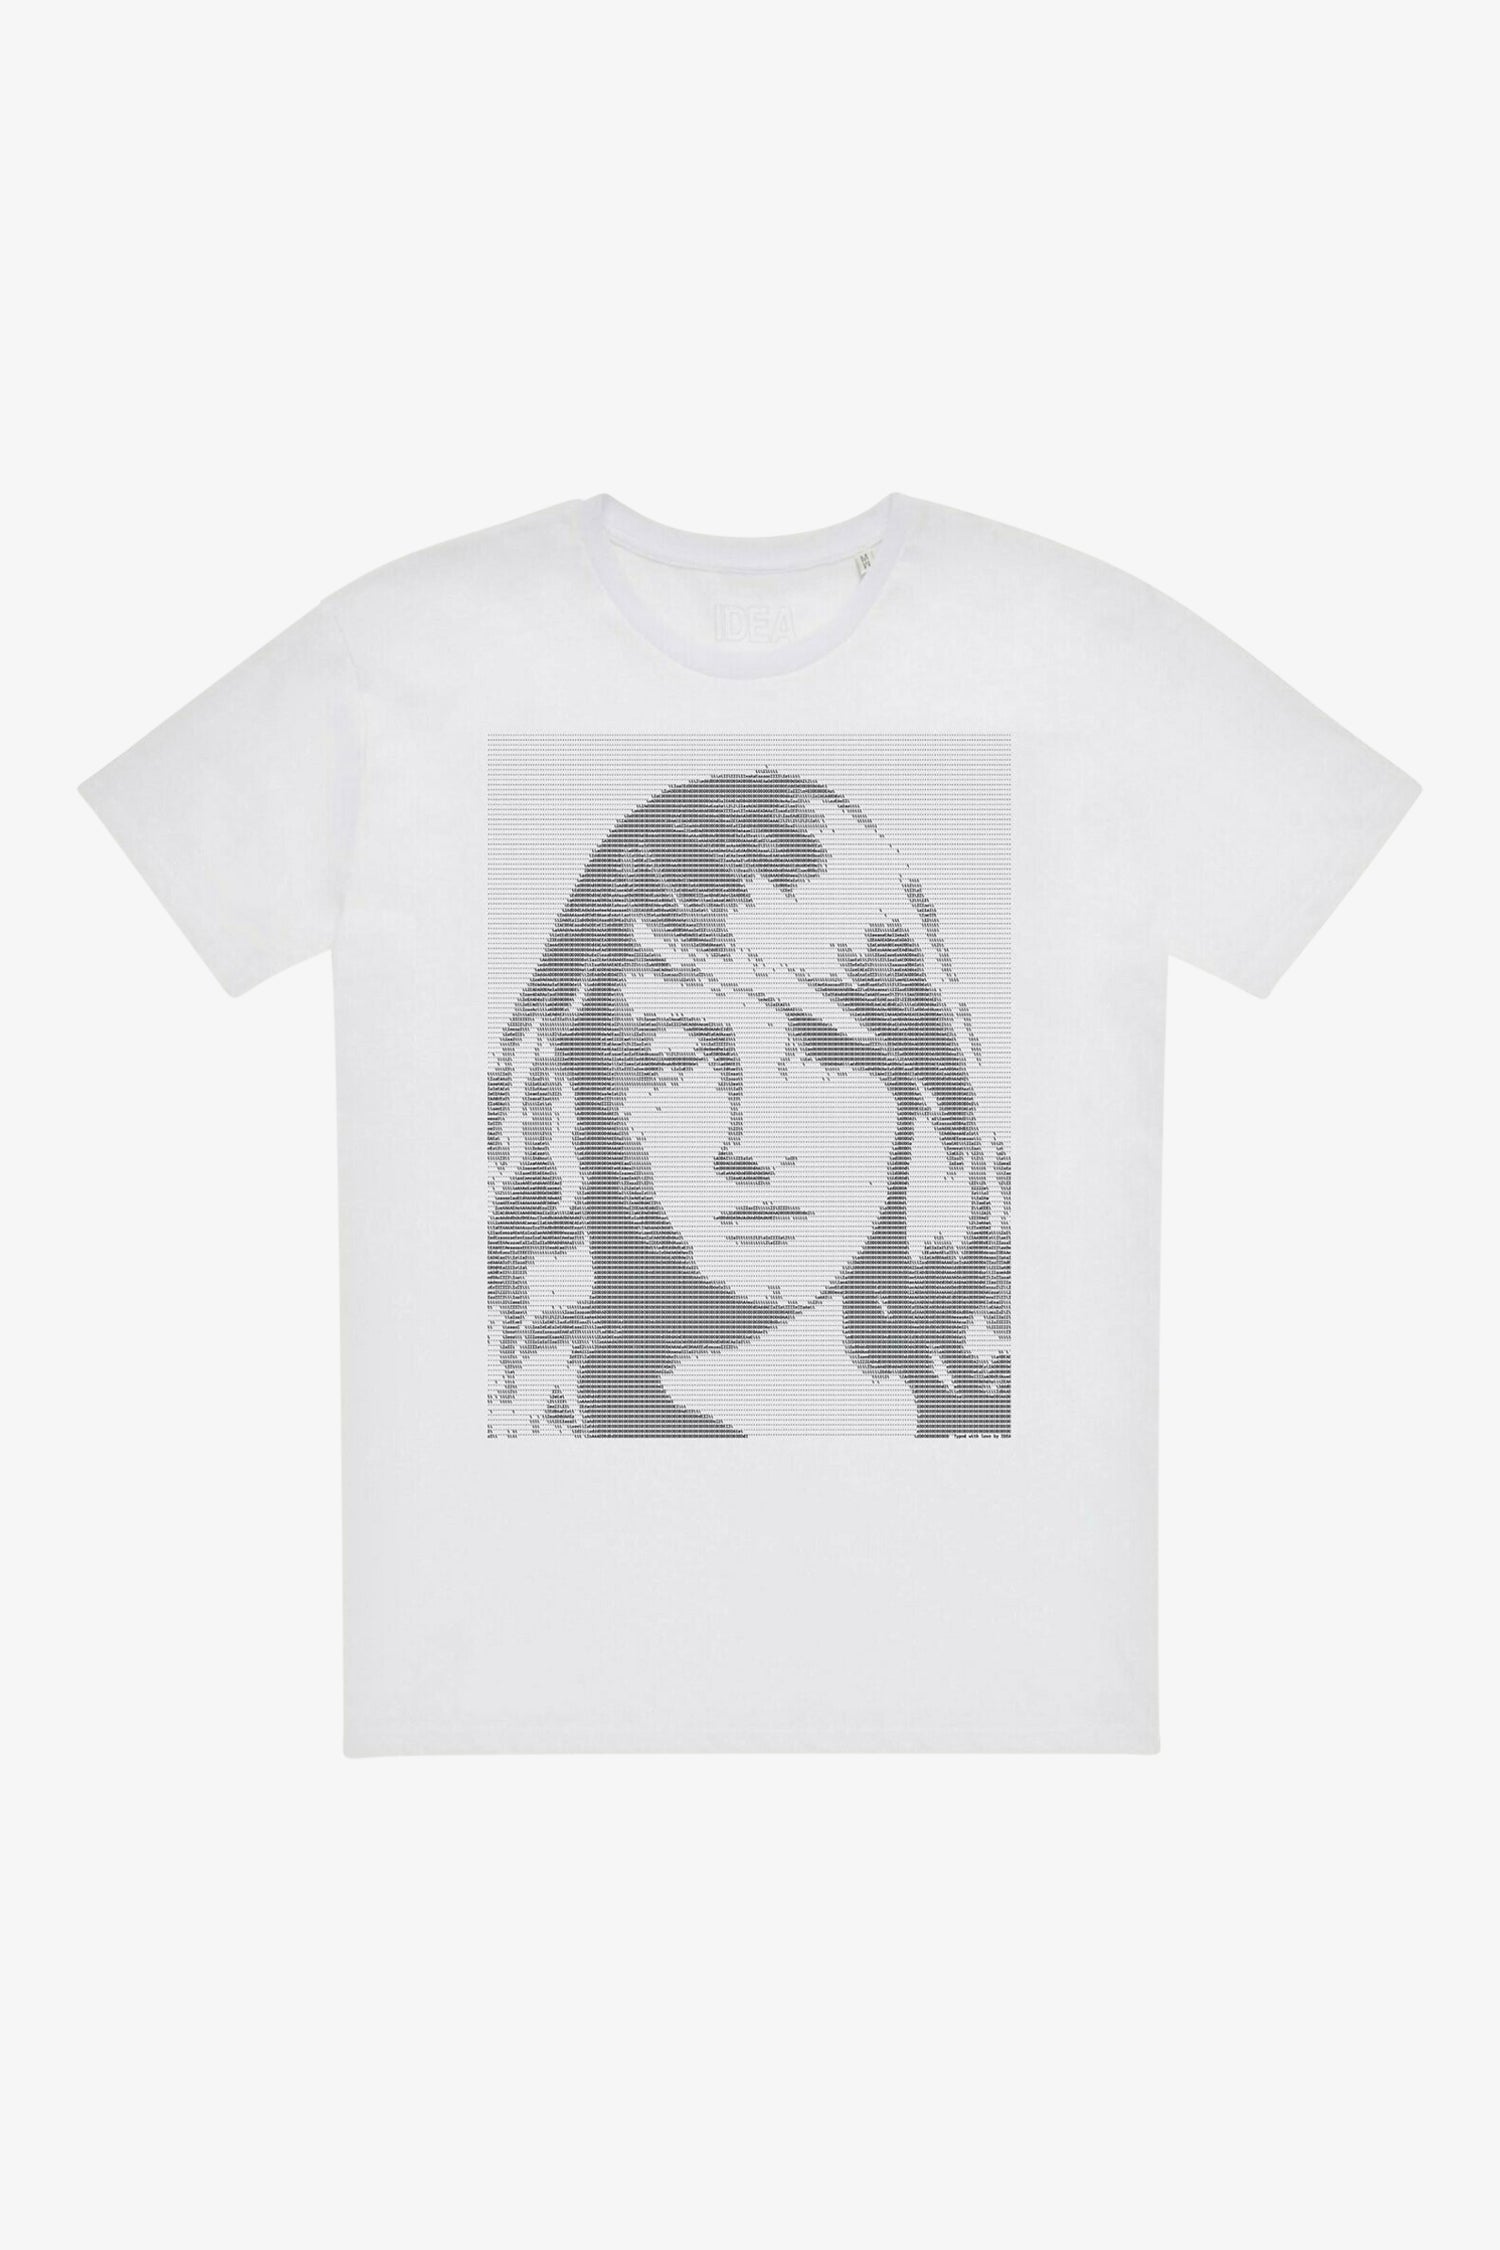 Selectshop FRAME - IDEA Sean Type Art T-Shirt T-Shirt Dubai